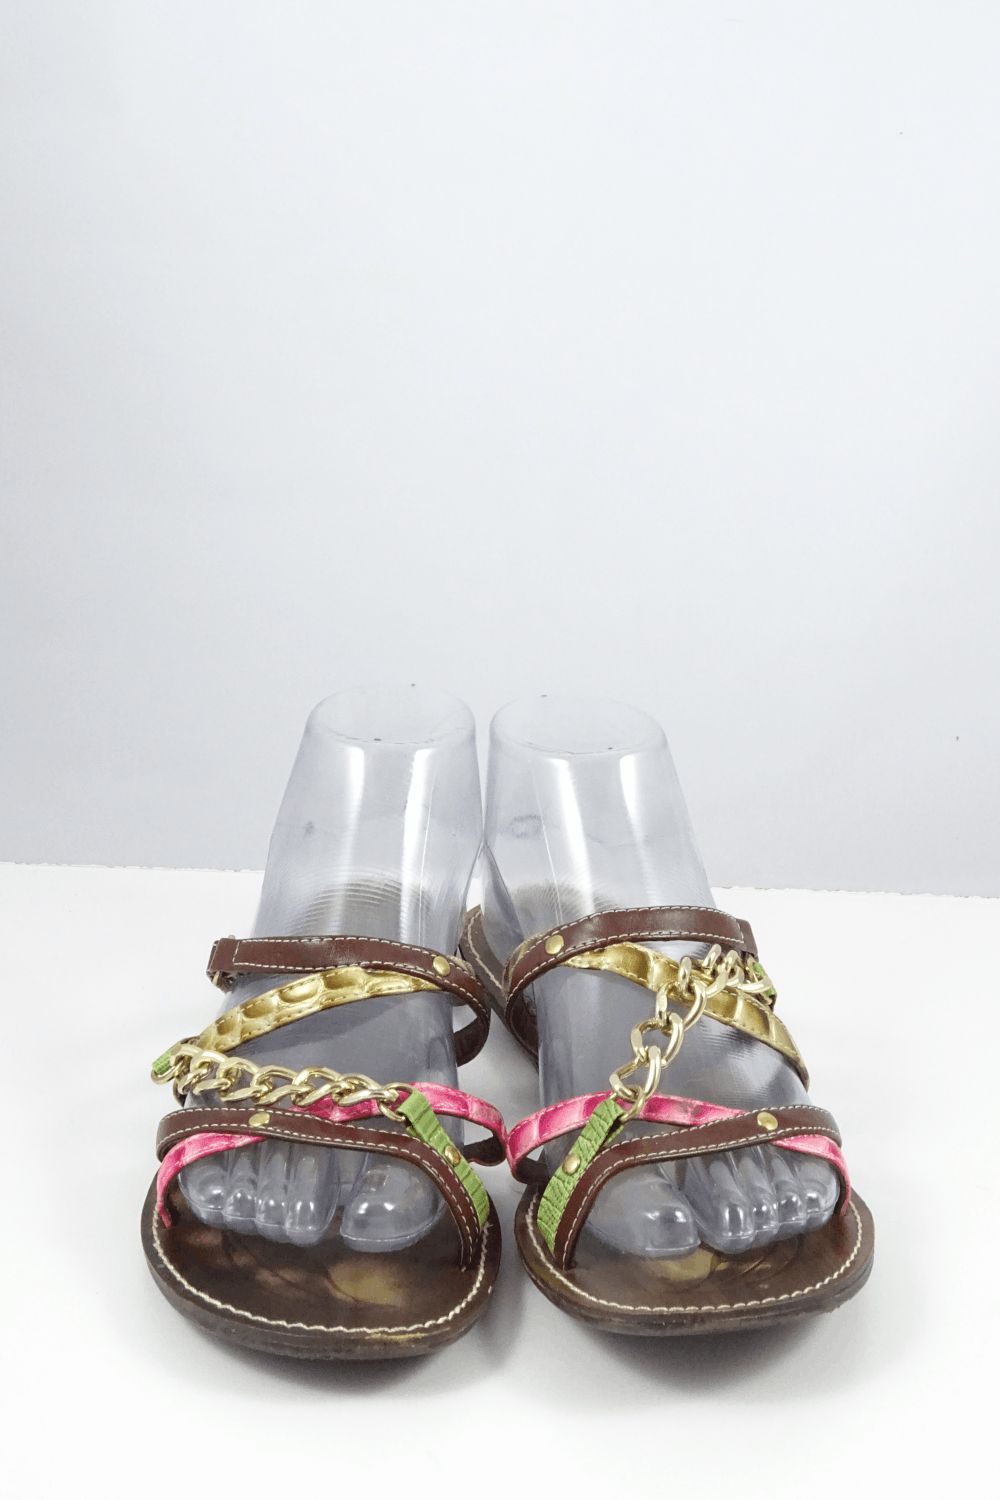 Chinese Laundry Sandals 7.5 AU